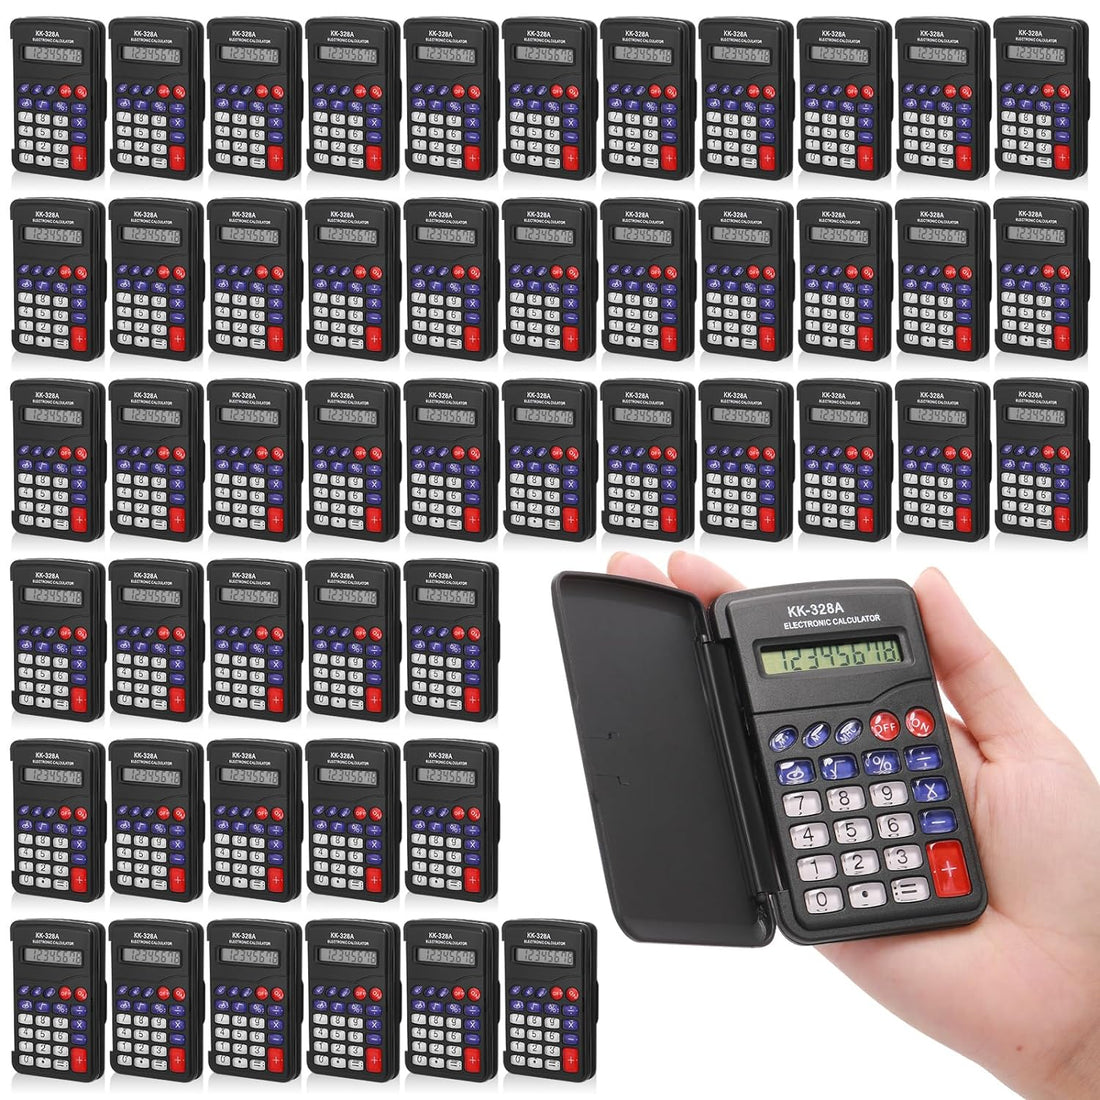 Kanayu 50 Pcs Pocket Size Calculators Bulk 8 Digit Display Handheld Calculator Basic Calculator with Cover Button Battery Black Mini Calculator for School Desktop Home Office Kids Teacher